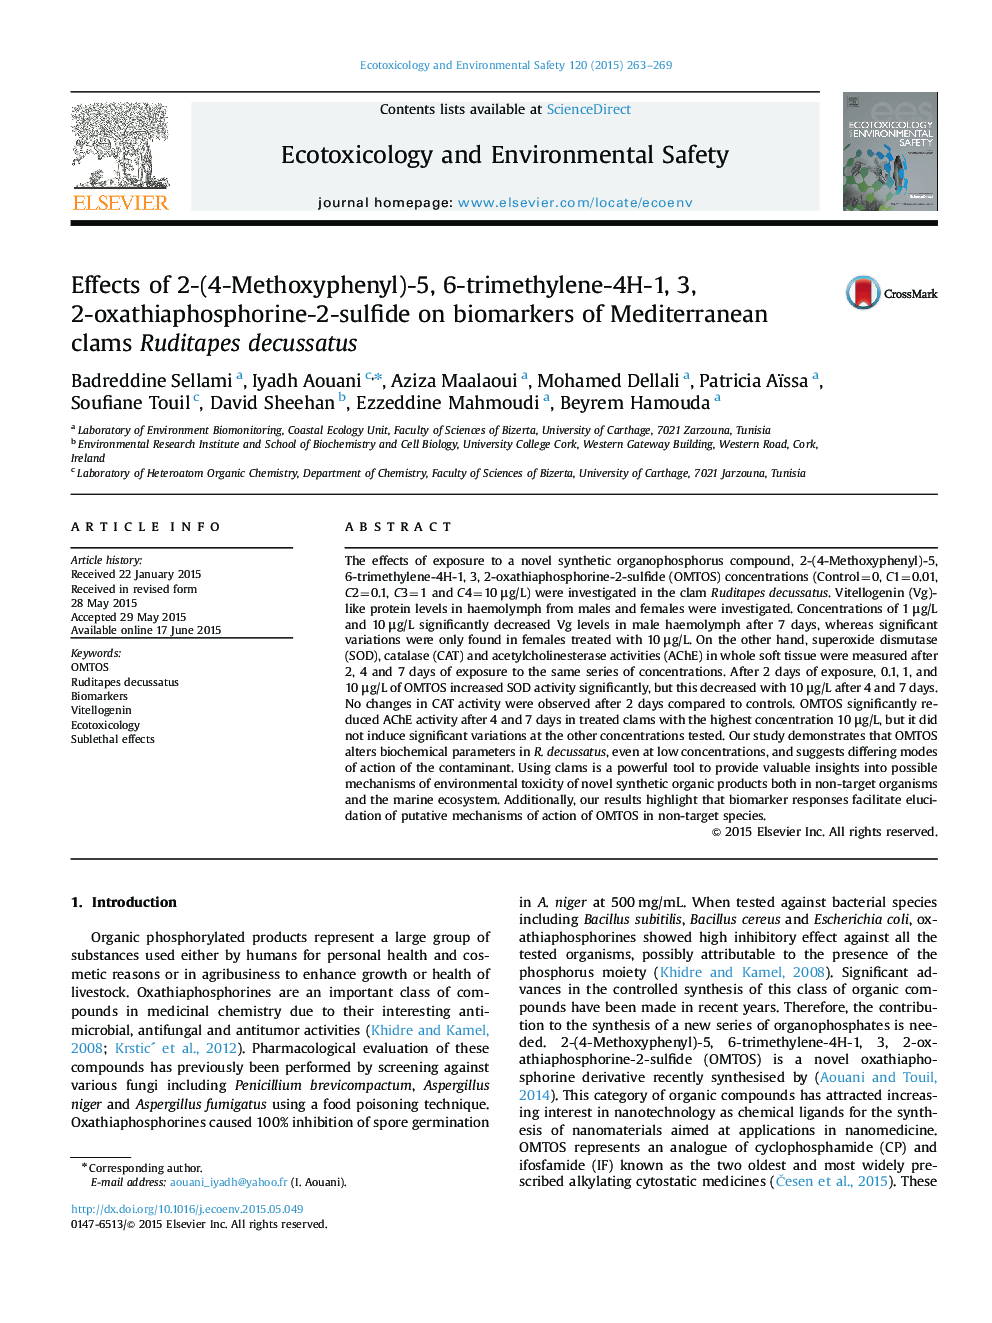 Effects of 2-(4-Methoxyphenyl)-5, 6-trimethylene-4H-1, 3, 2-oxathiaphosphorine-2-sulfide on biomarkers of Mediterranean clams Ruditapes decussatus